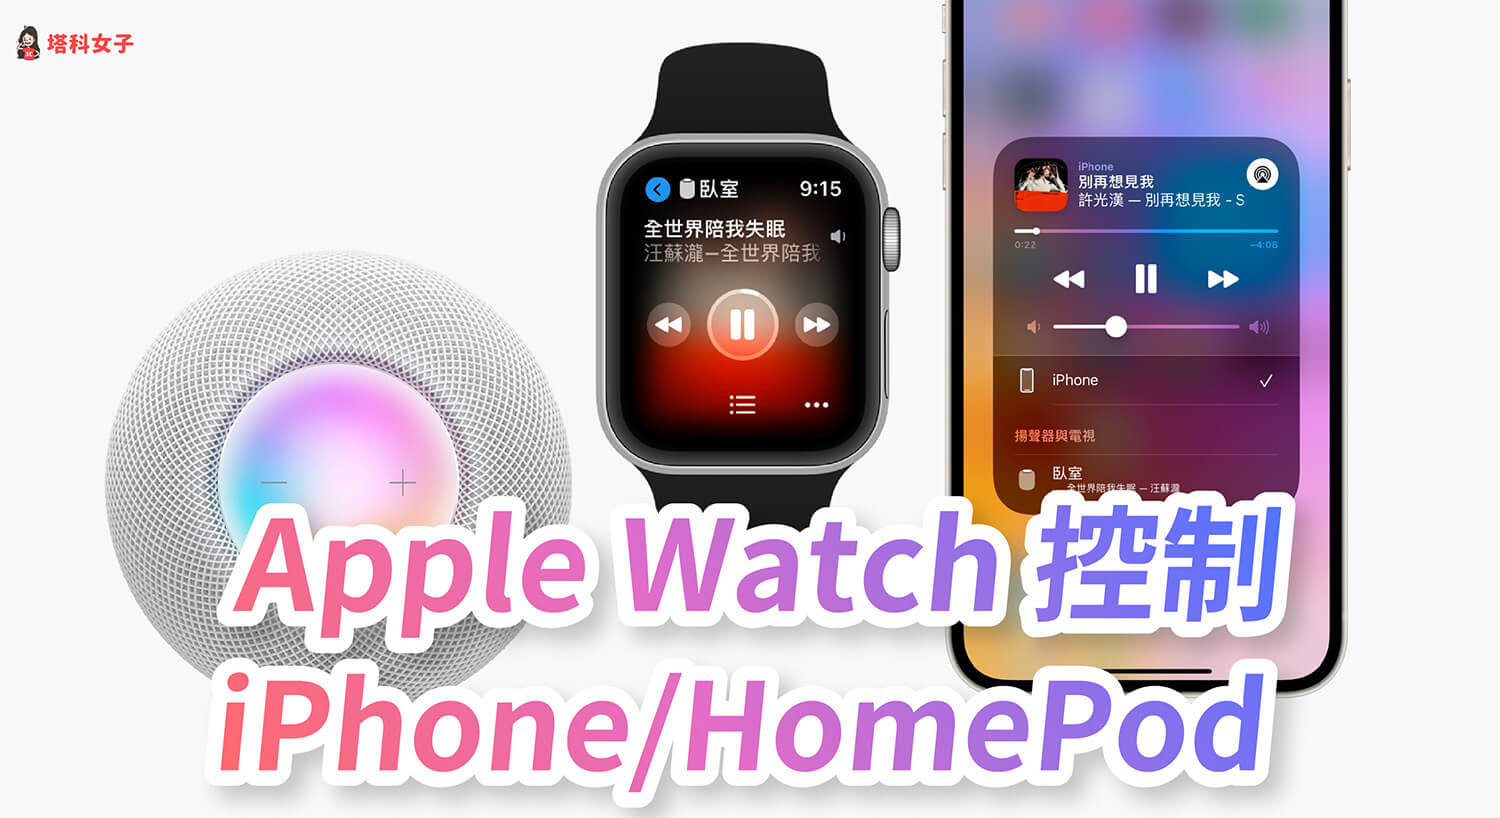 Apple Watch 如何控制 iPhone、HomePod 播放音樂？完整步驟教學